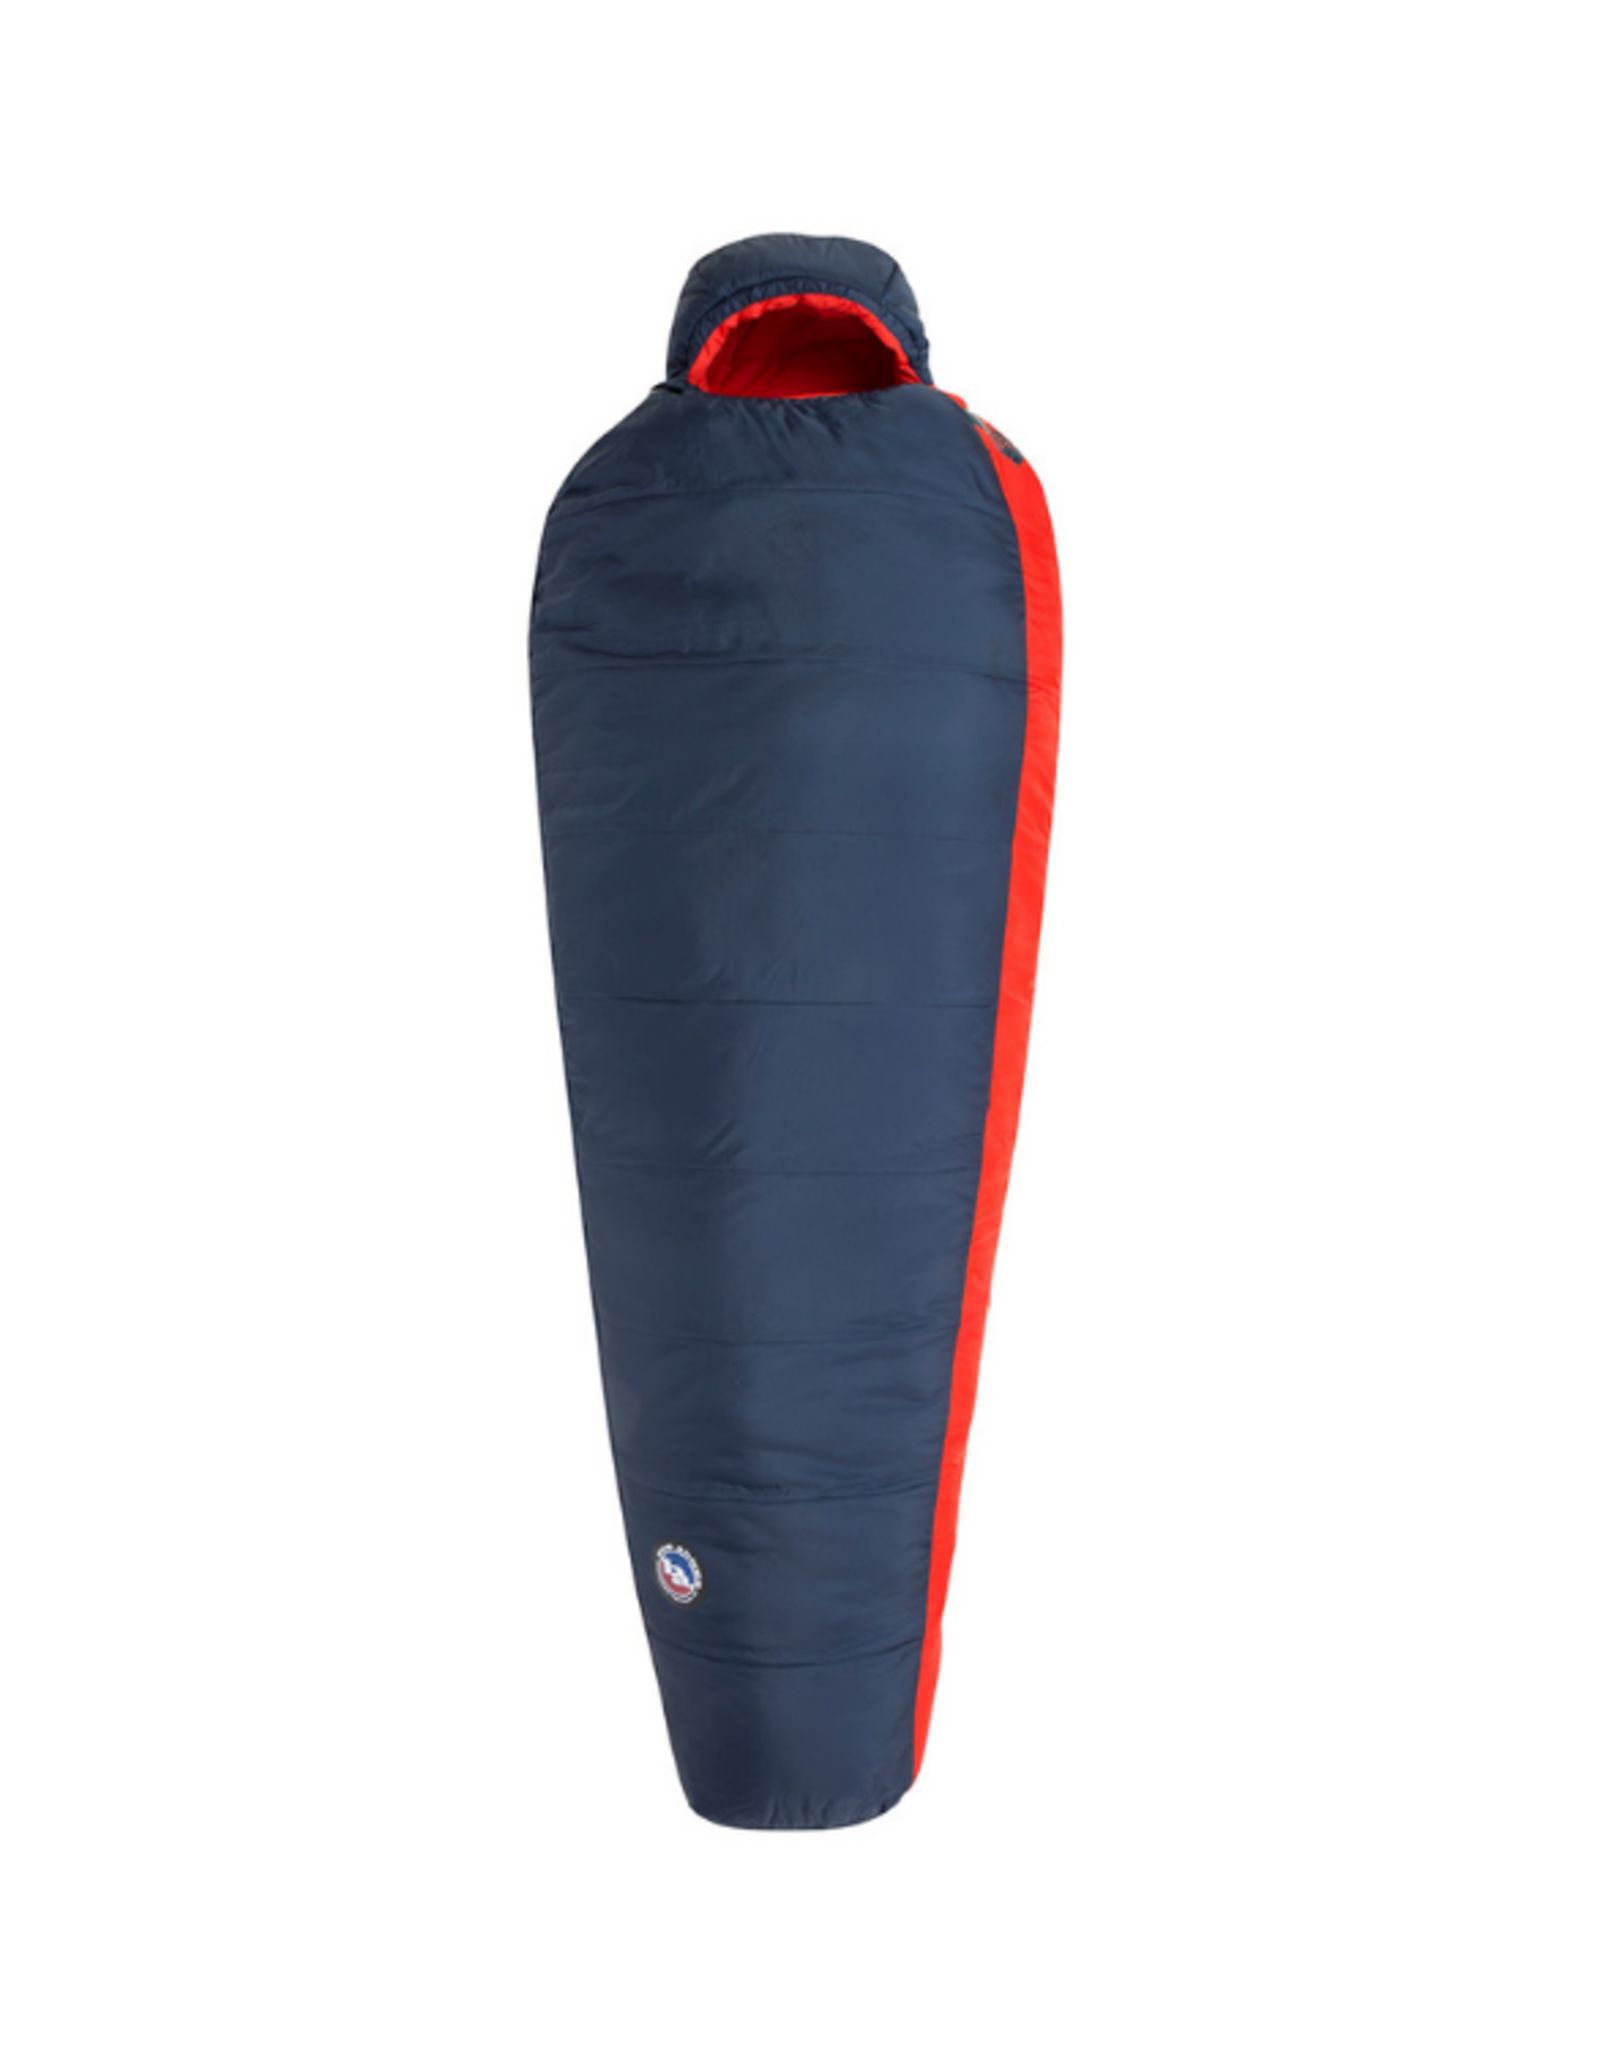 Big Agnes Husted 20 (FireLine Pro) Sleeping Bag Long Left Navy/Red